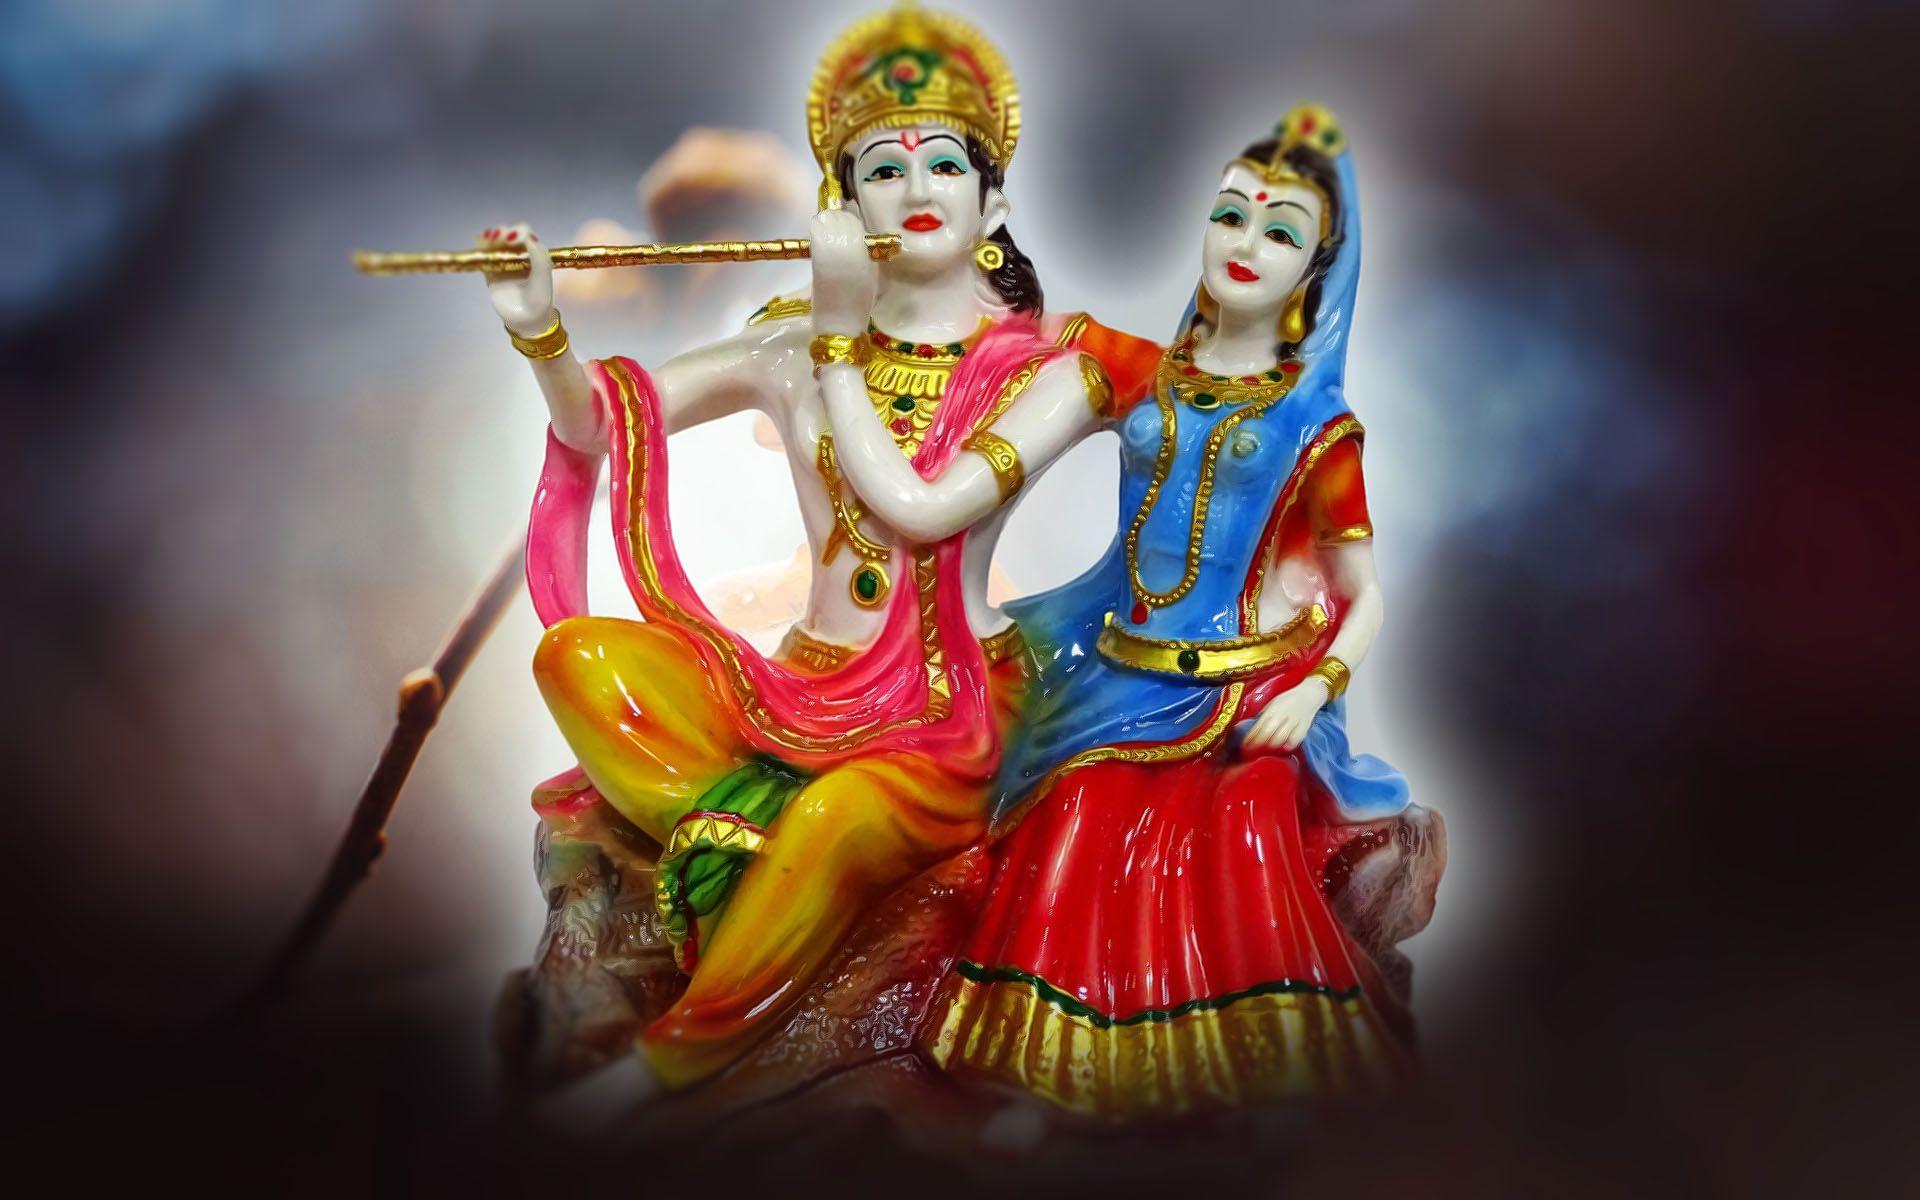 Lord Krishna 4K Wallpapers - Top Free Lord Krishna 4K Backgrounds